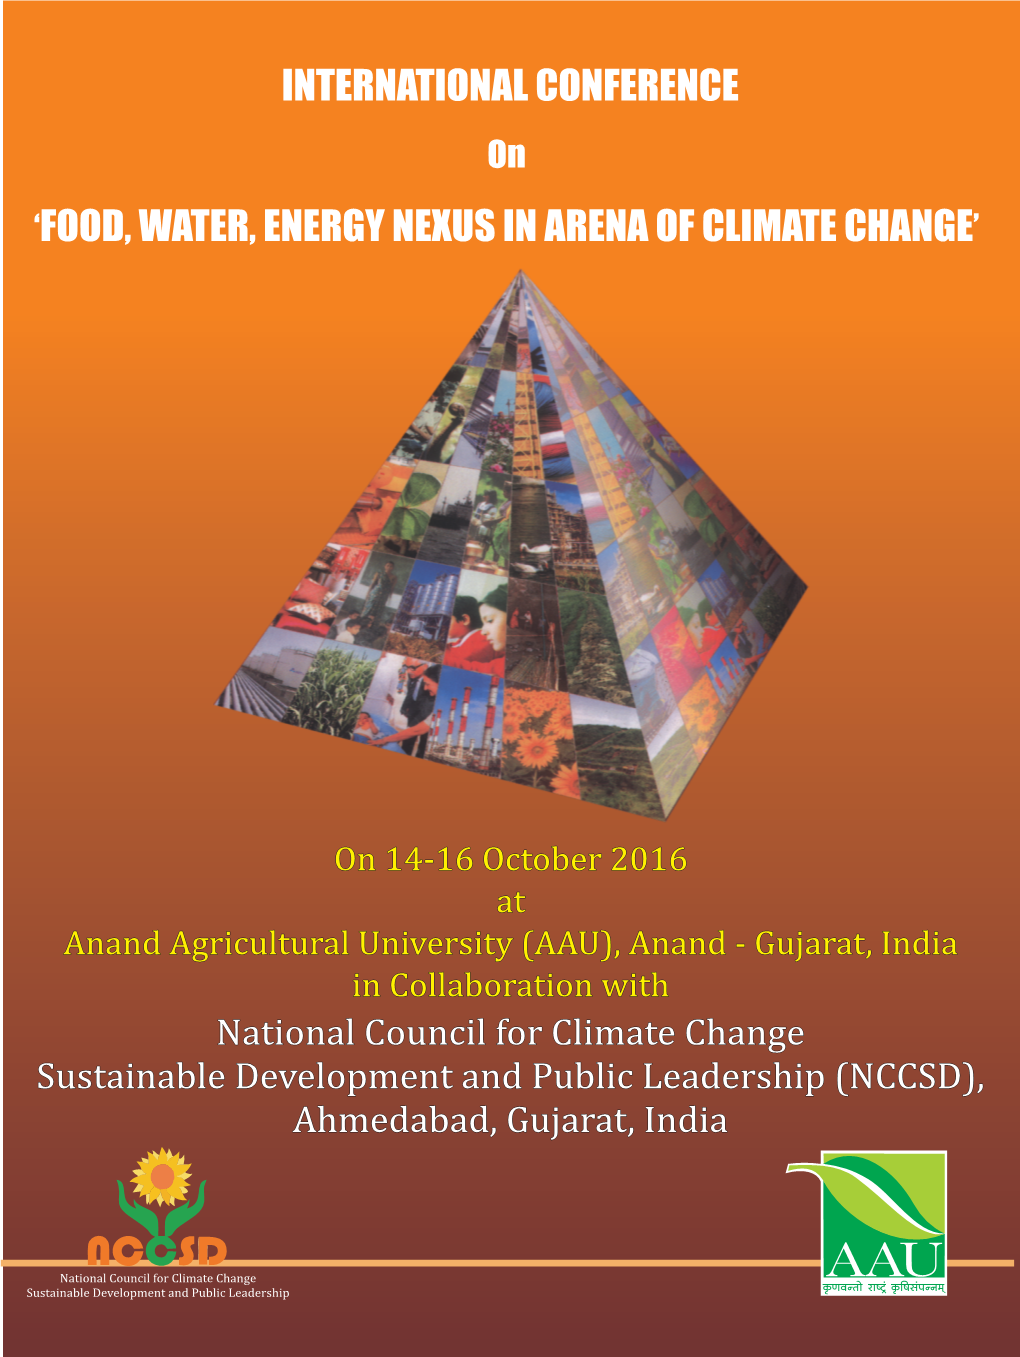 Food, Water, Energy Nexus in Arena of Climate Change’